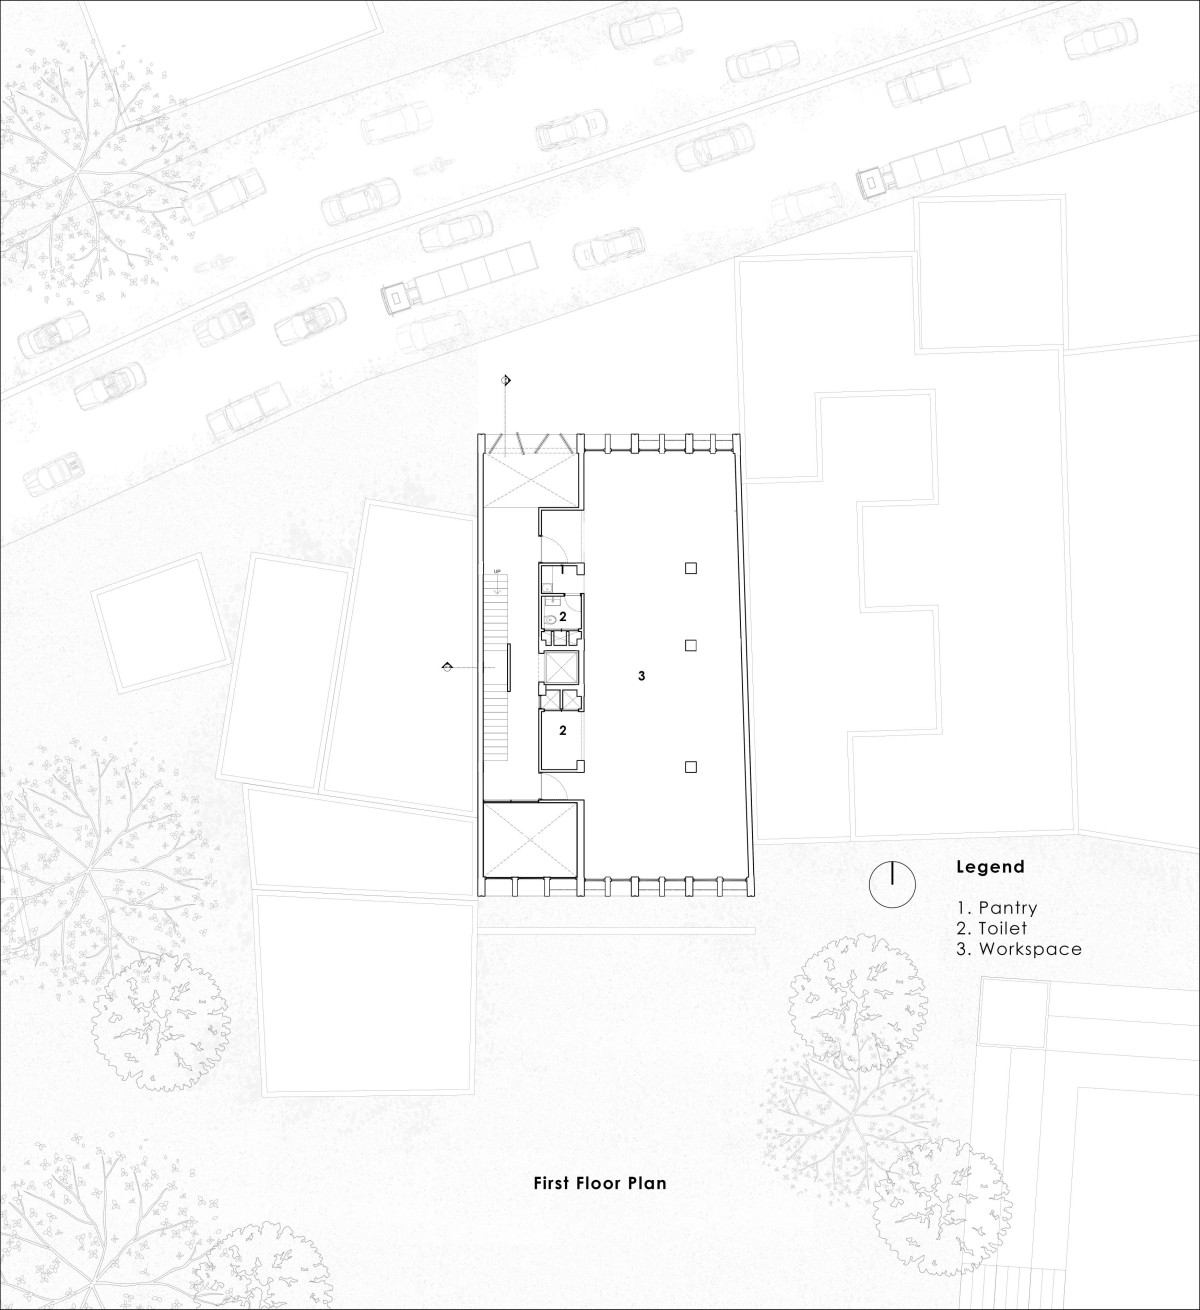 First floor plan of Veiled Building by KUN Studio